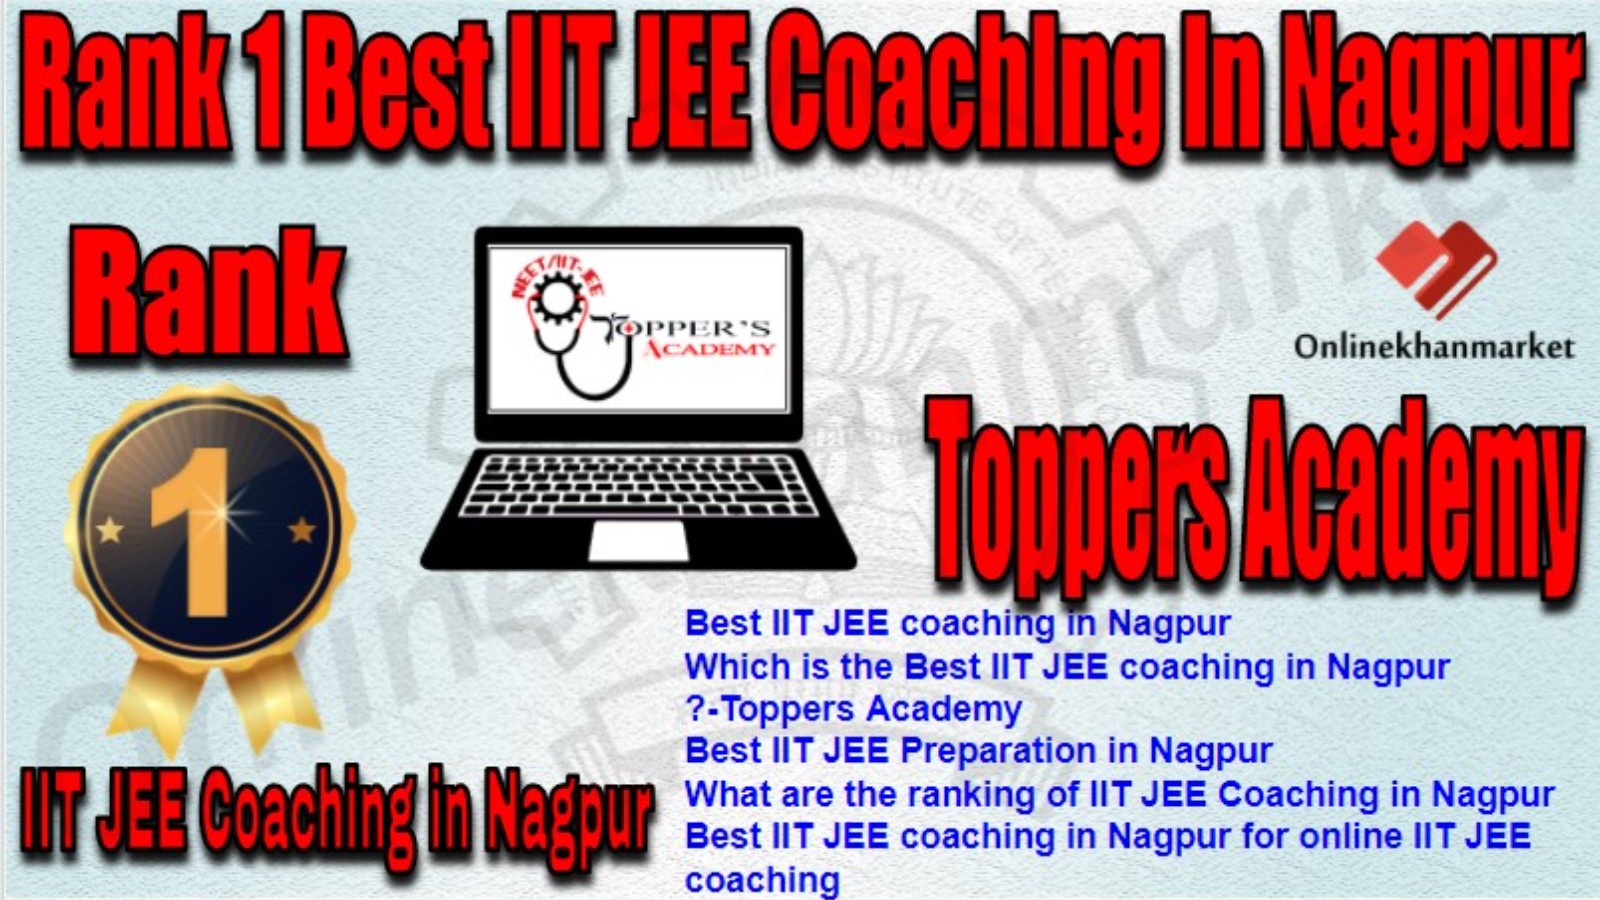 Rank 1 Best IIT JEE Coaching in nagpur 